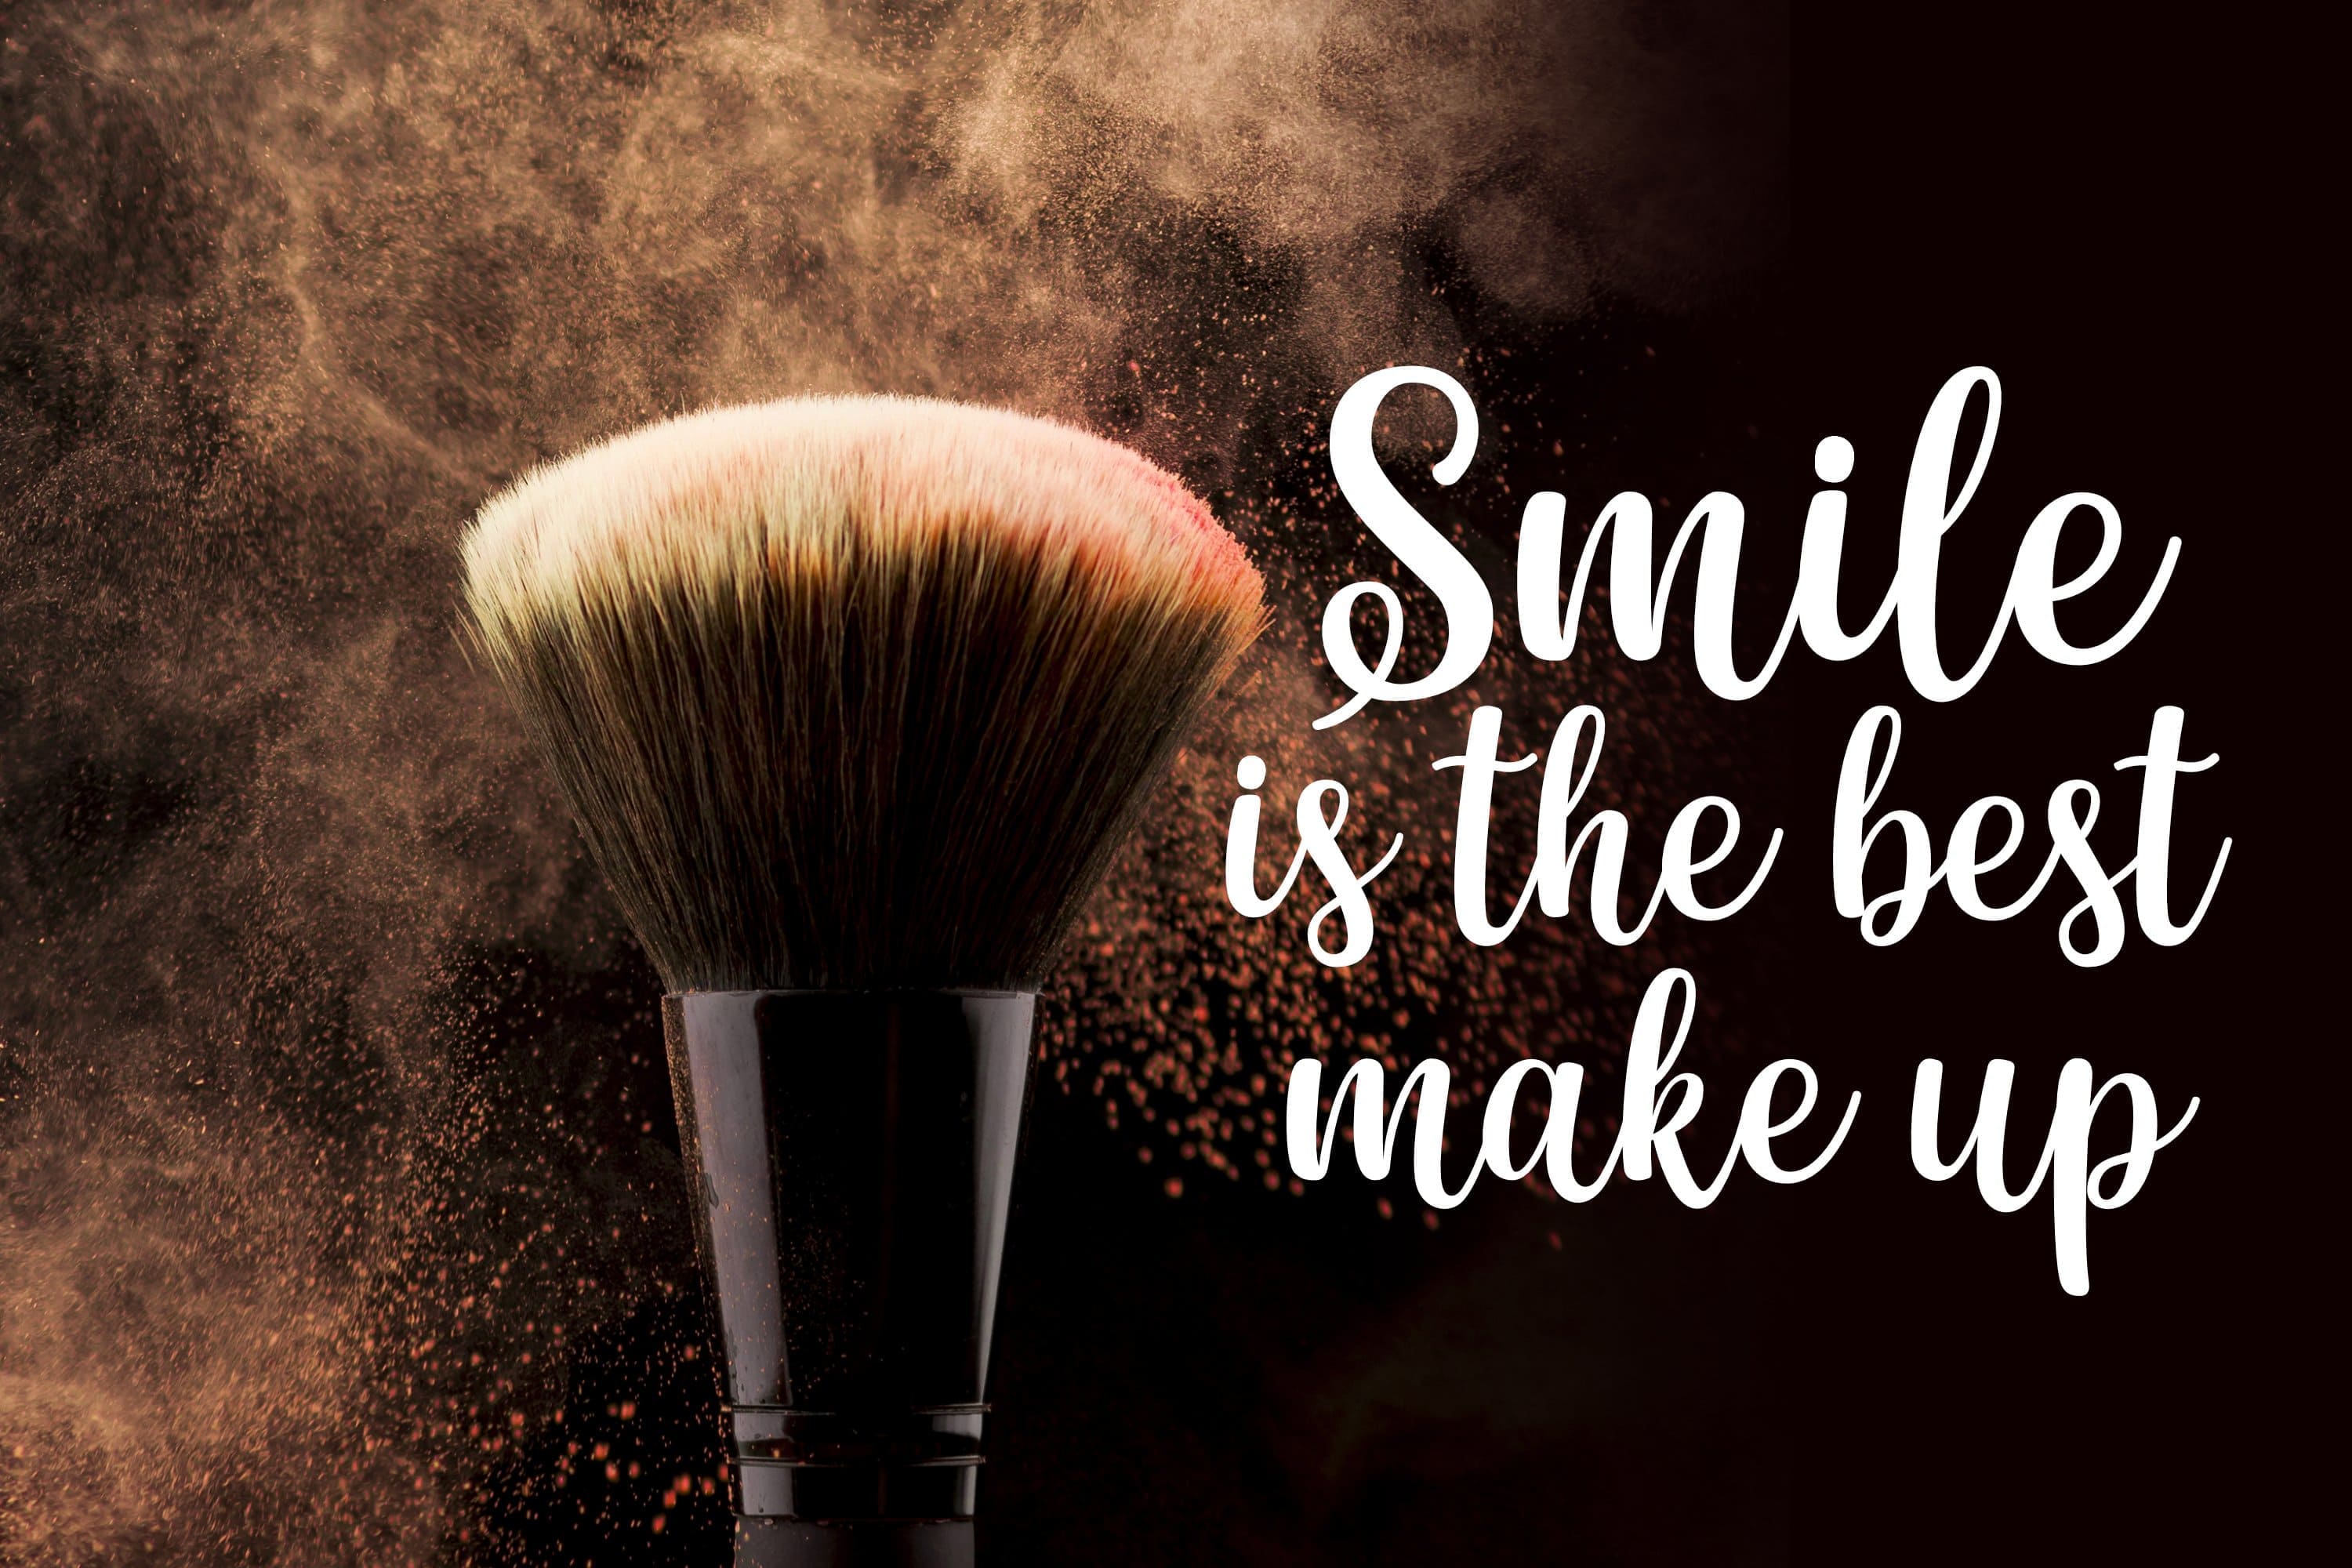 Dark slide with inscription "Smile is the best make up".